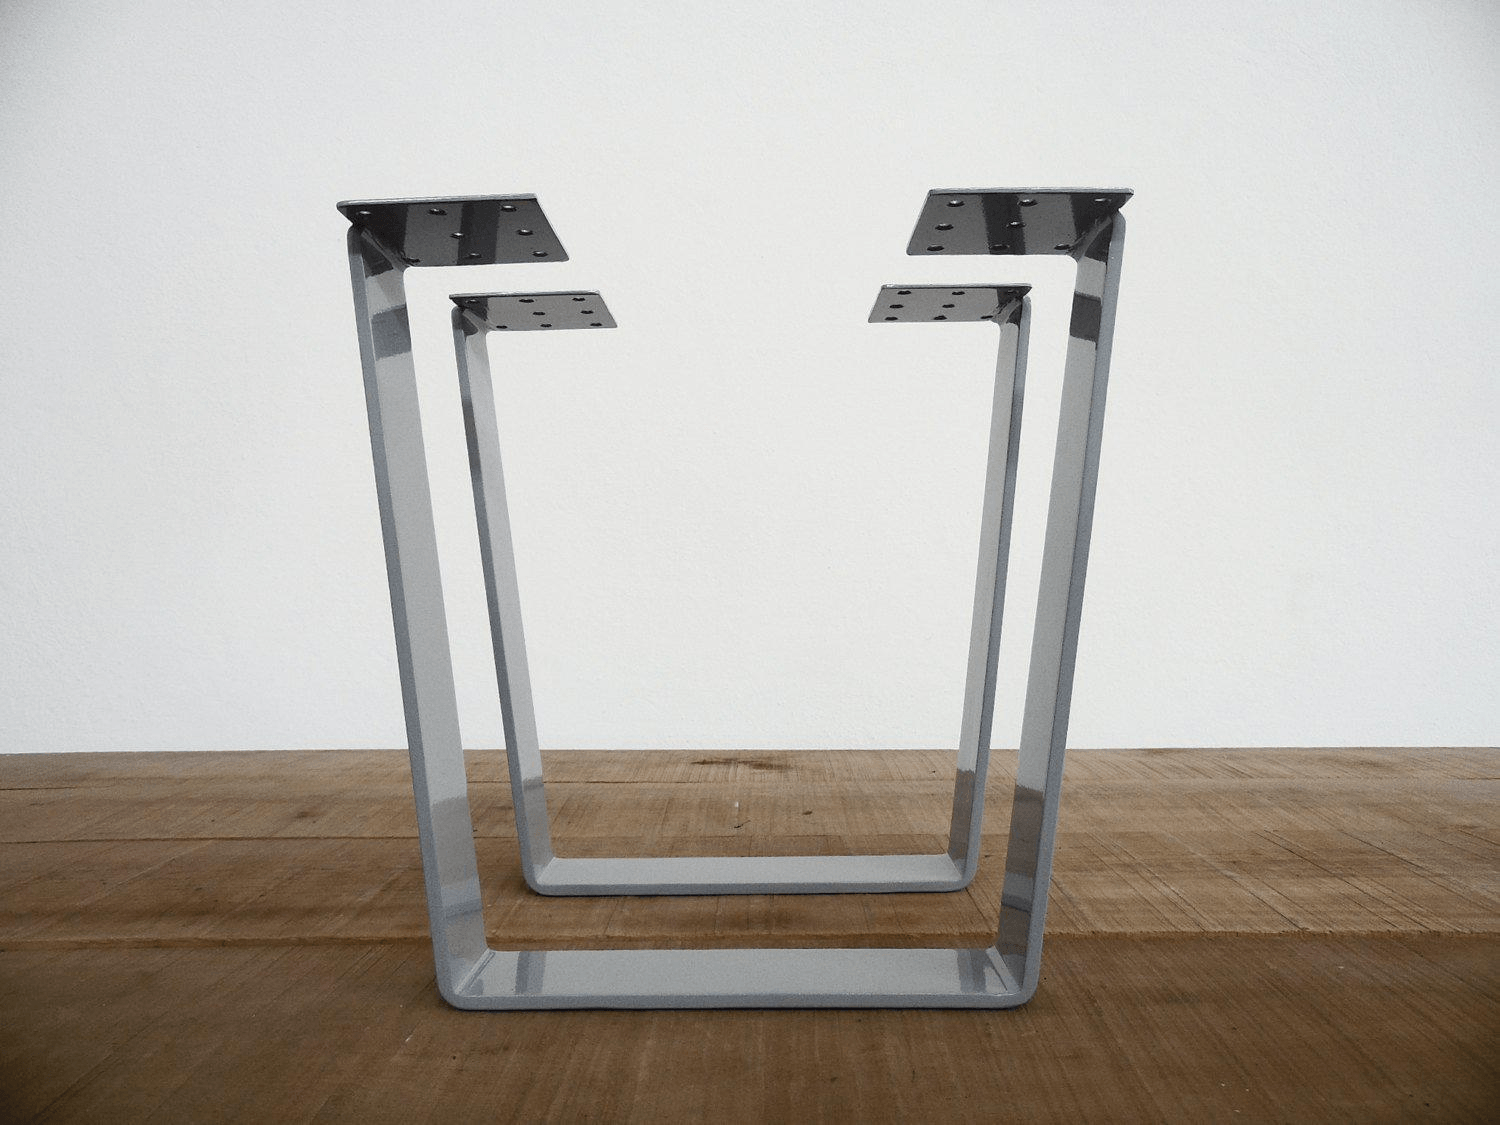 16" Flat Steel Trapezoid Coffee Table &Bench Legs